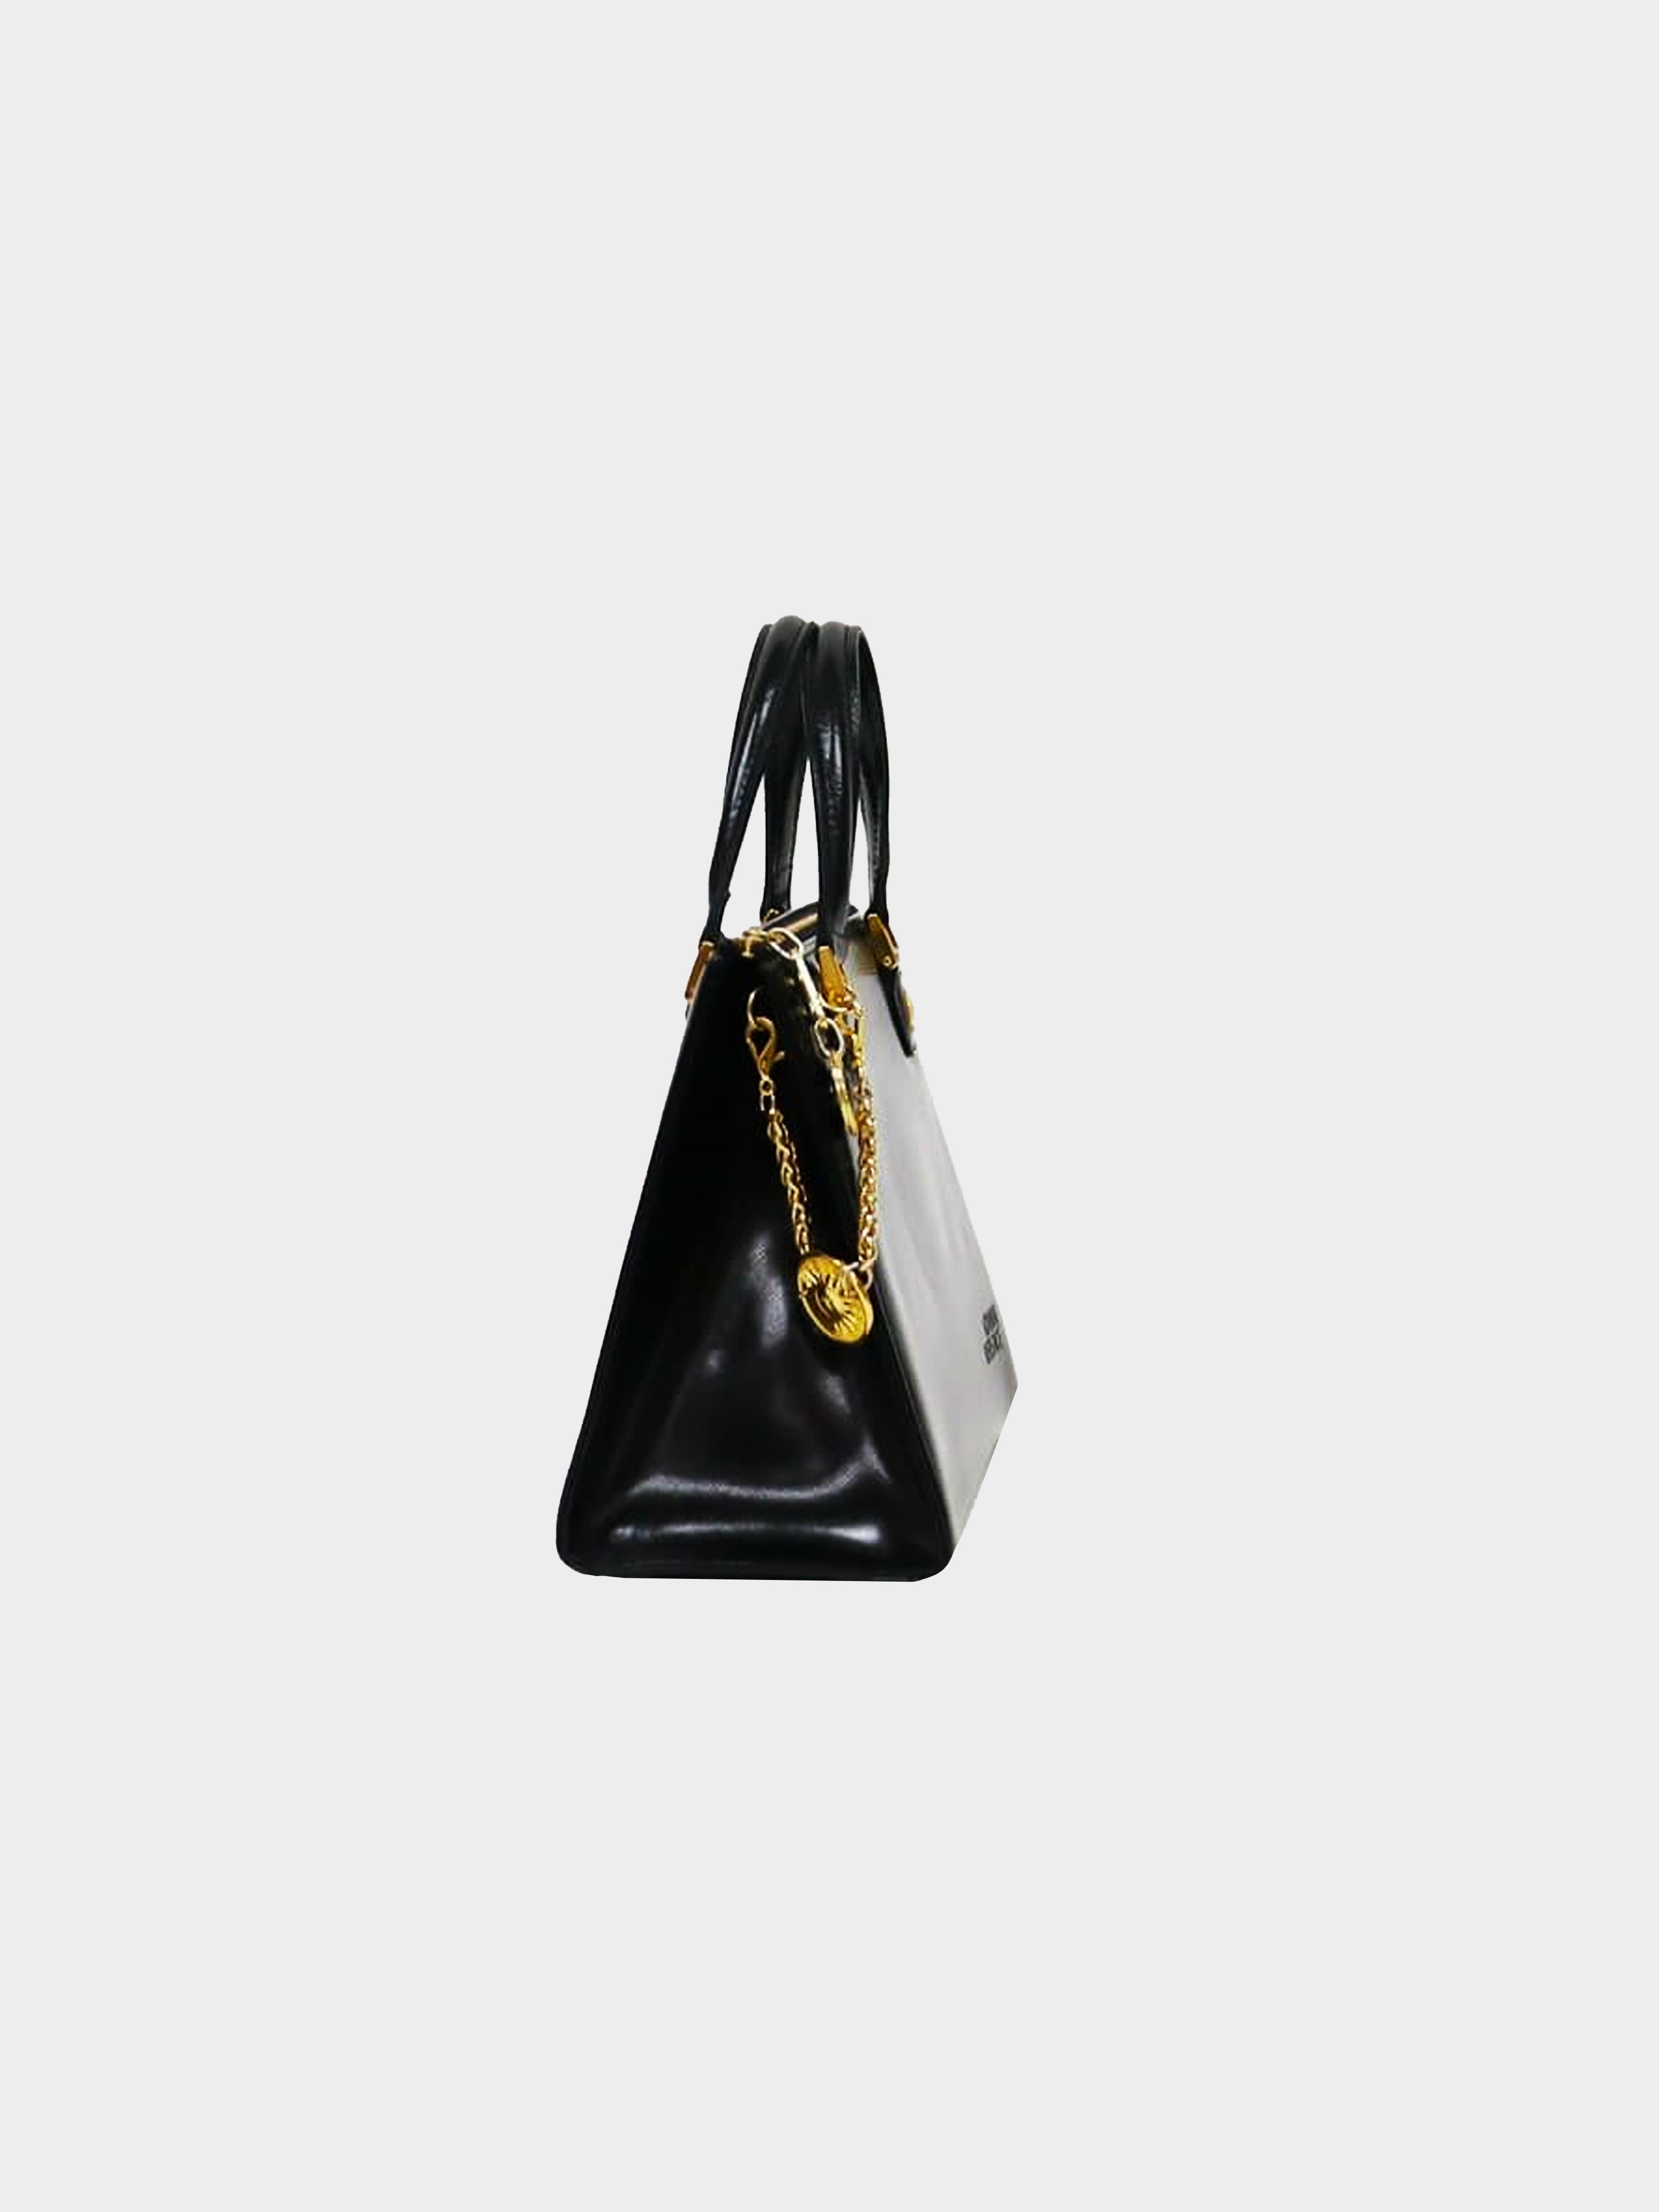 Gianni Versace 1990s Medusa Chain Handbag · INTO